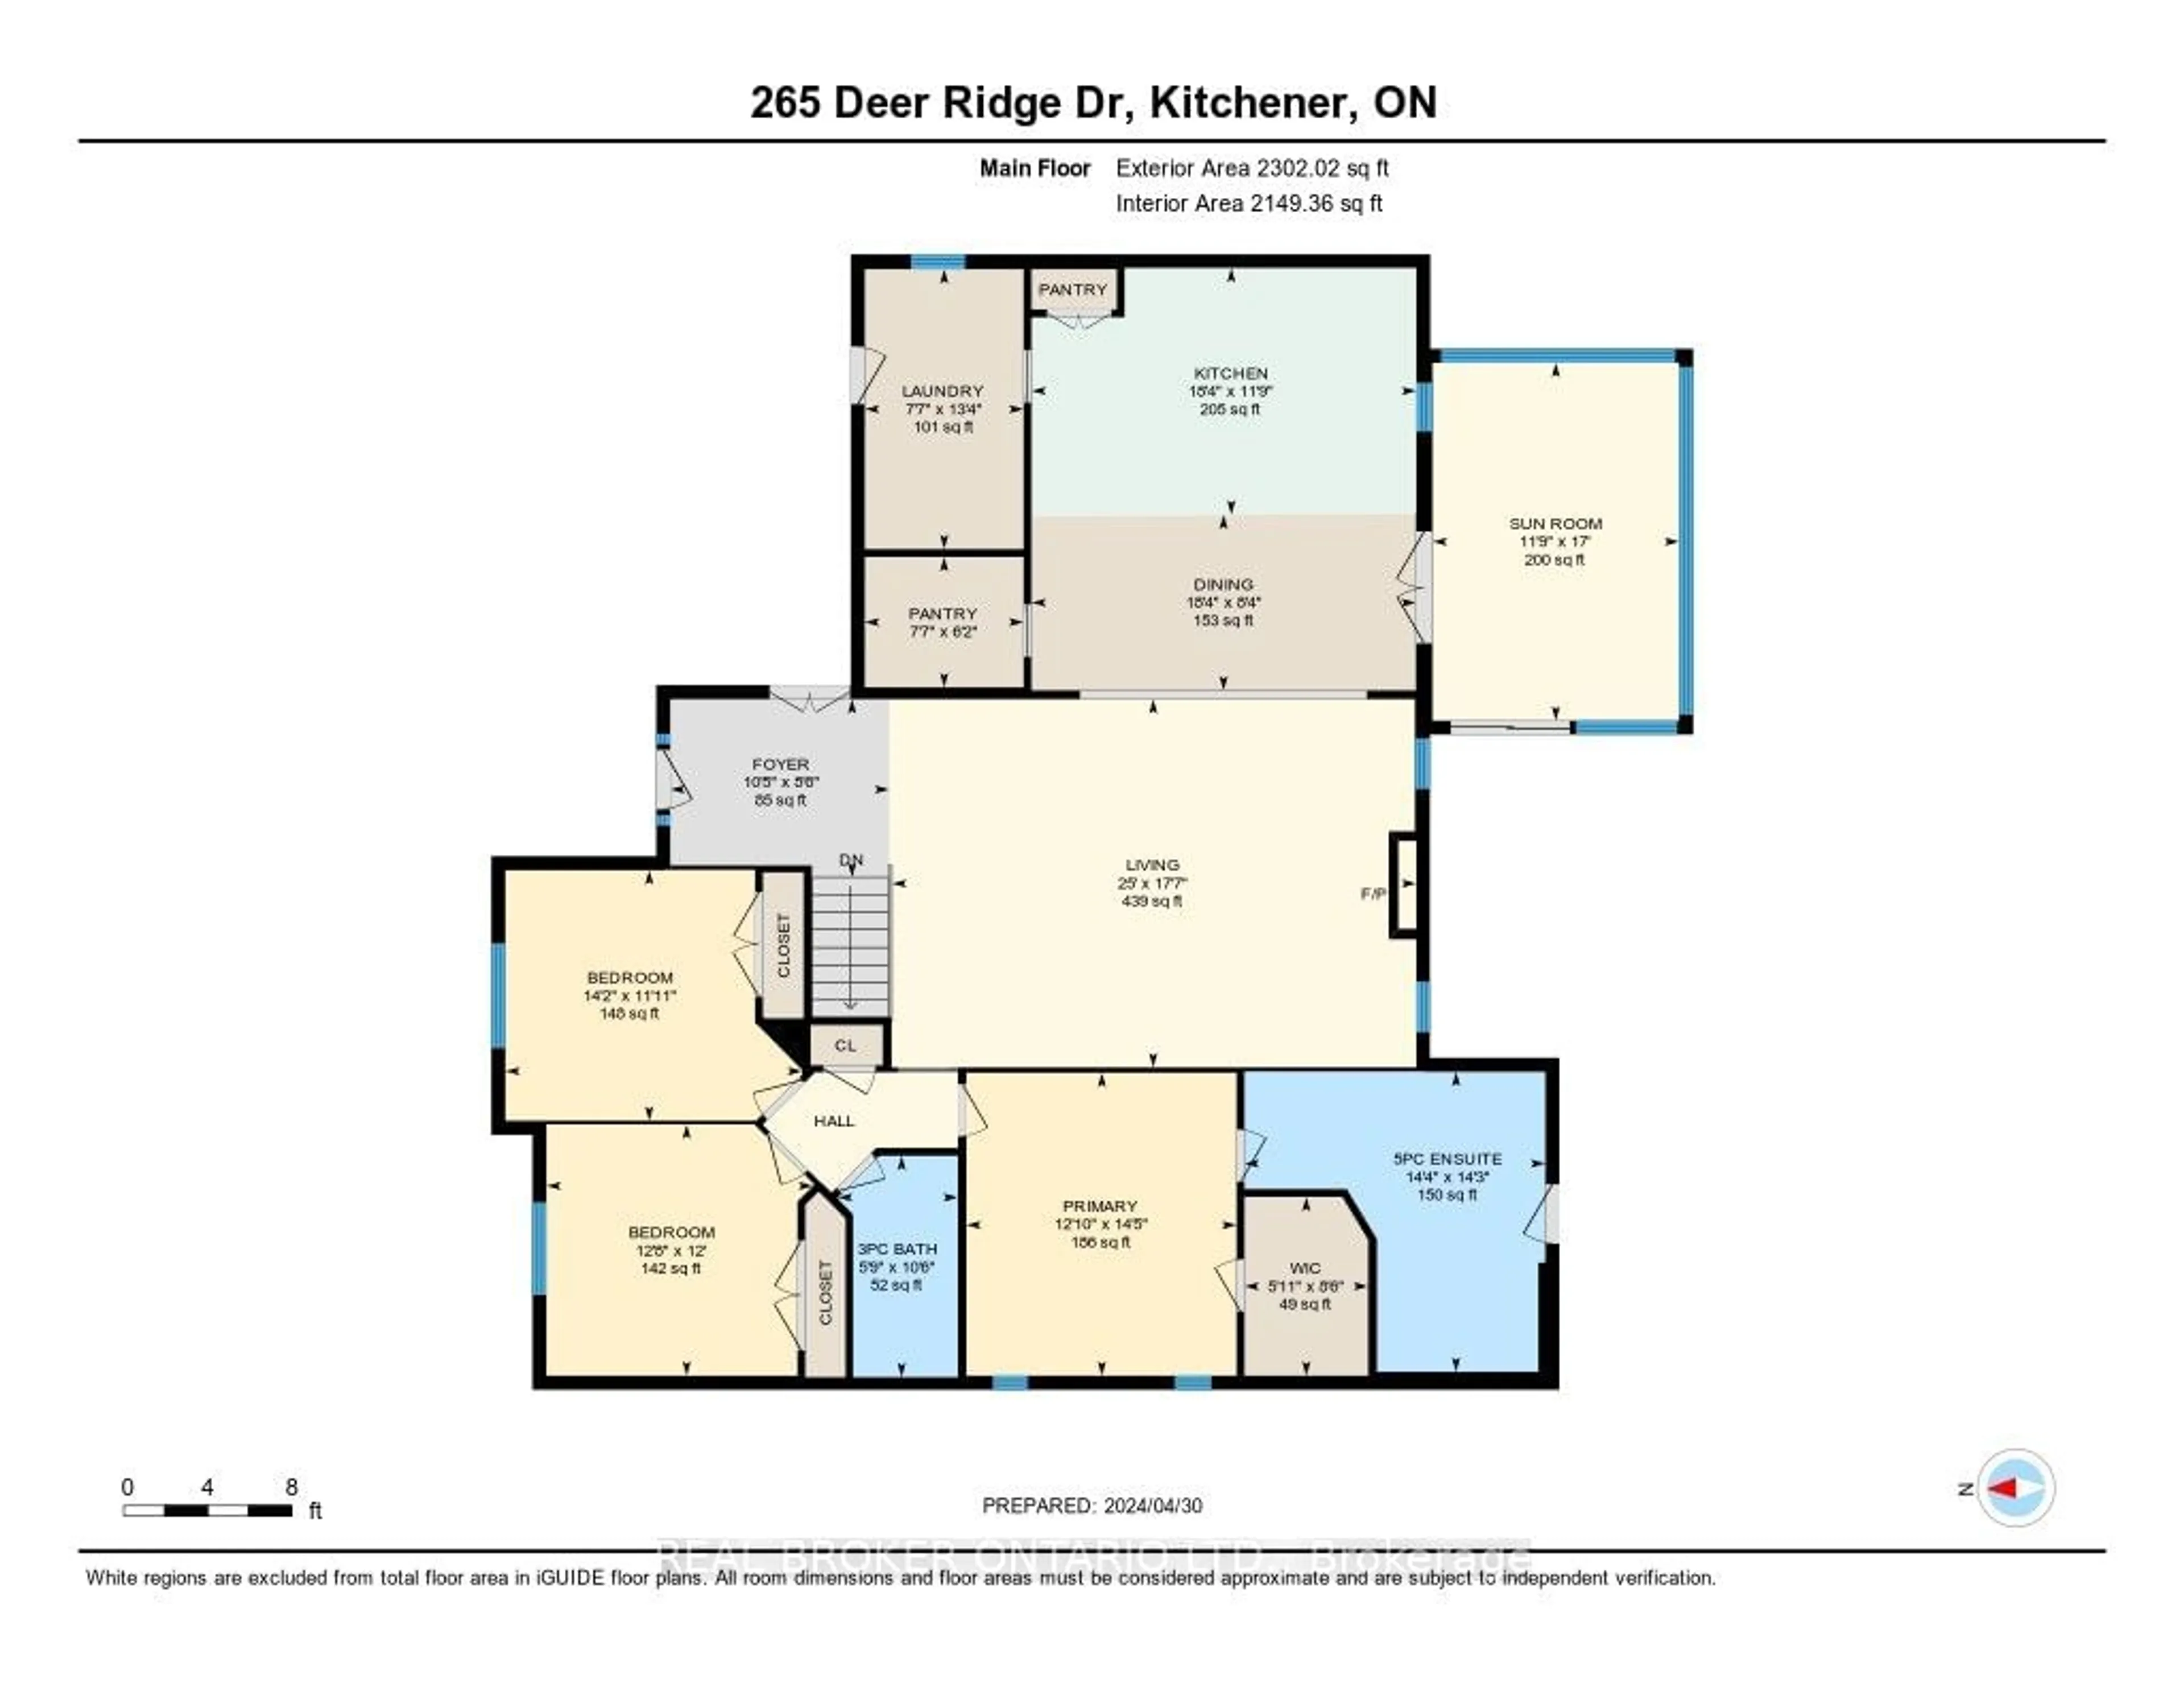 Floor plan for 265 Deer Ridge Dr, Kitchener Ontario N2P 2K6